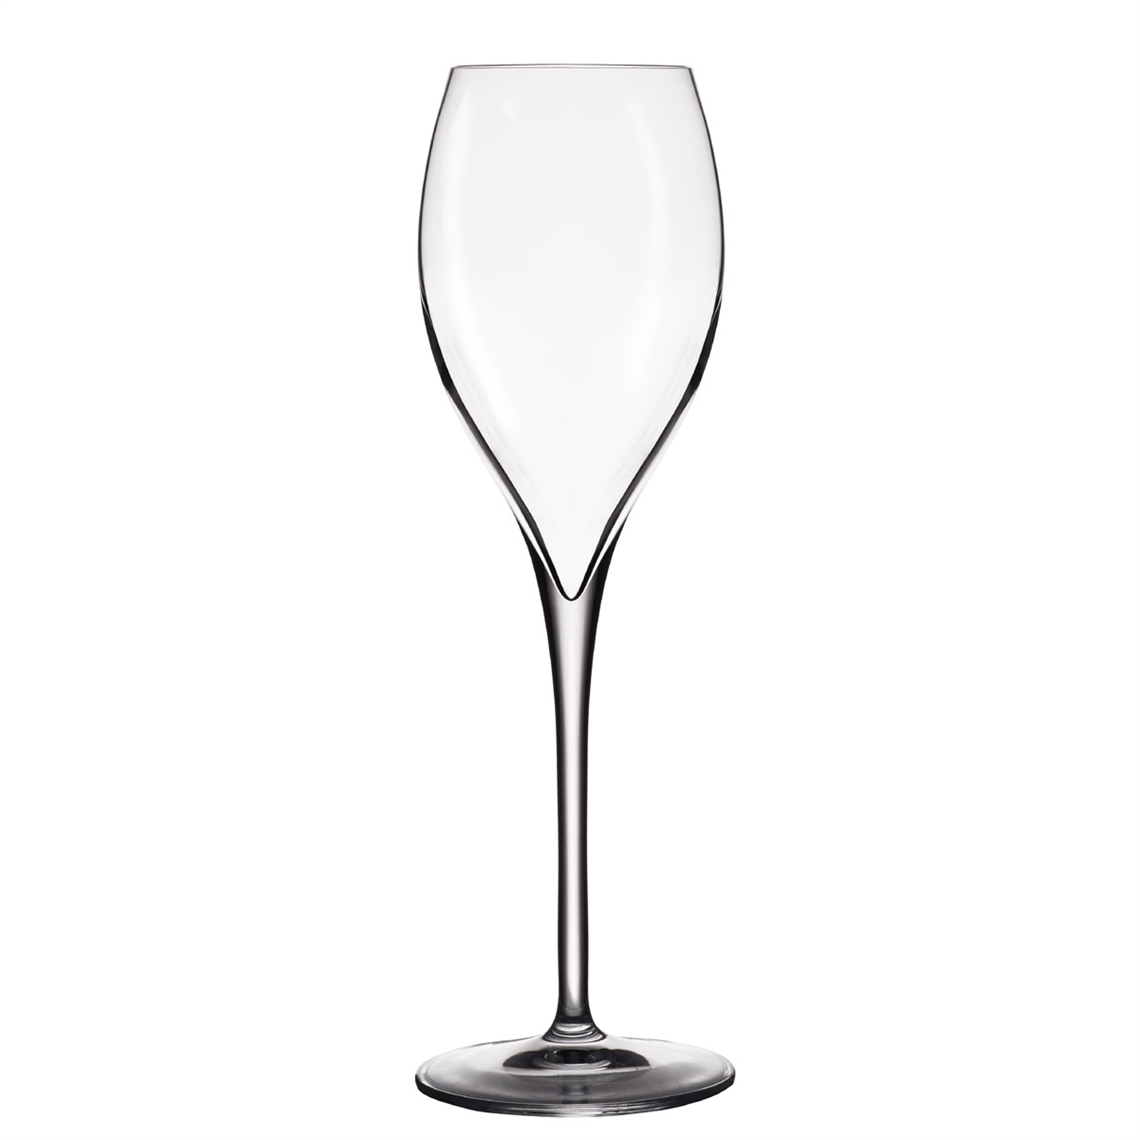 Lehmann Glass Opale Champagne / Sparkling Wine Glass 170ml - Set of 6